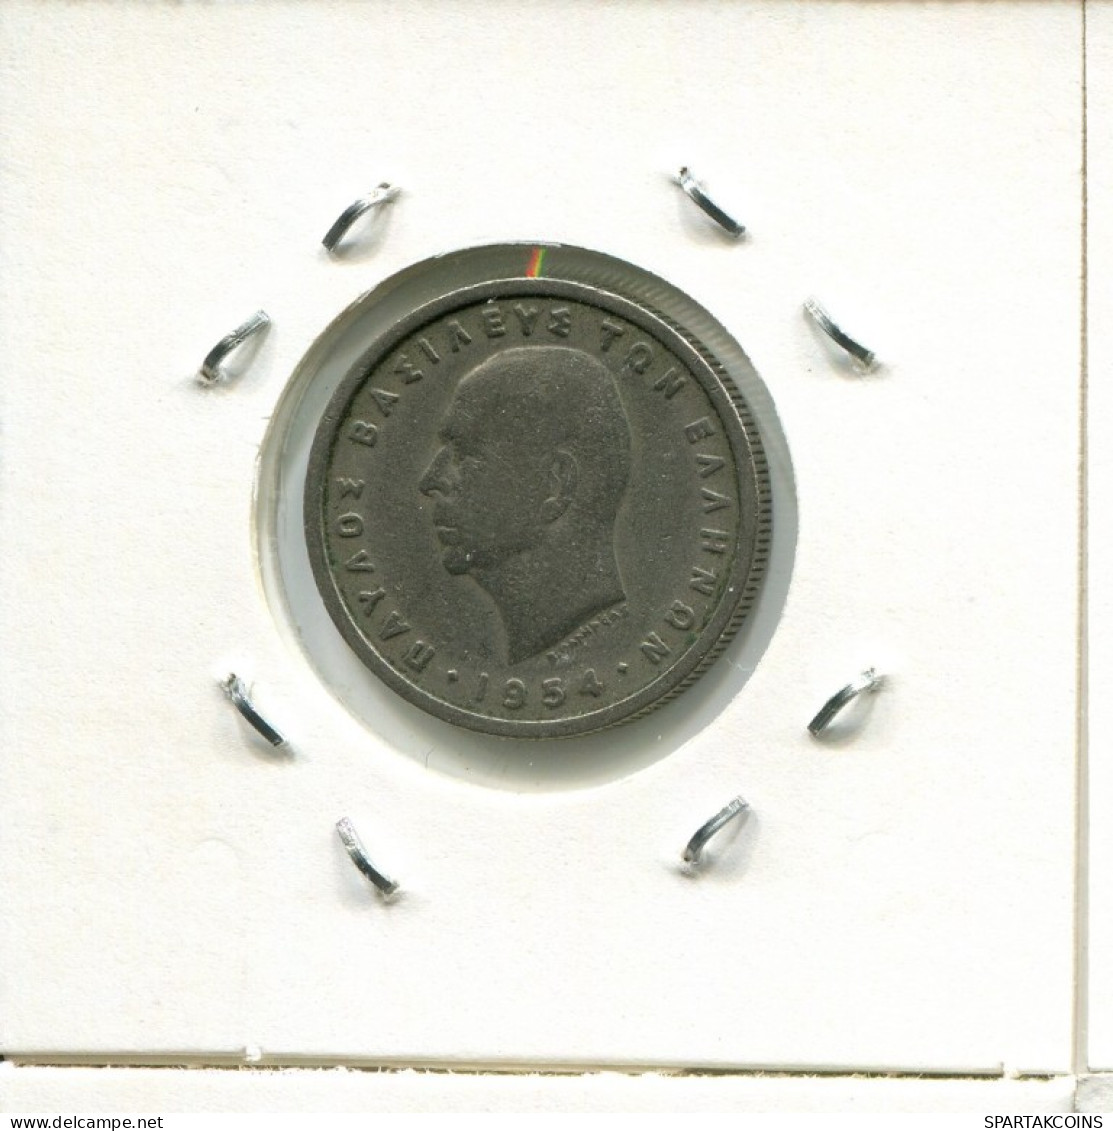 1 DRACHMA 1954 GREECE Coin #AK349.U.A - Grecia